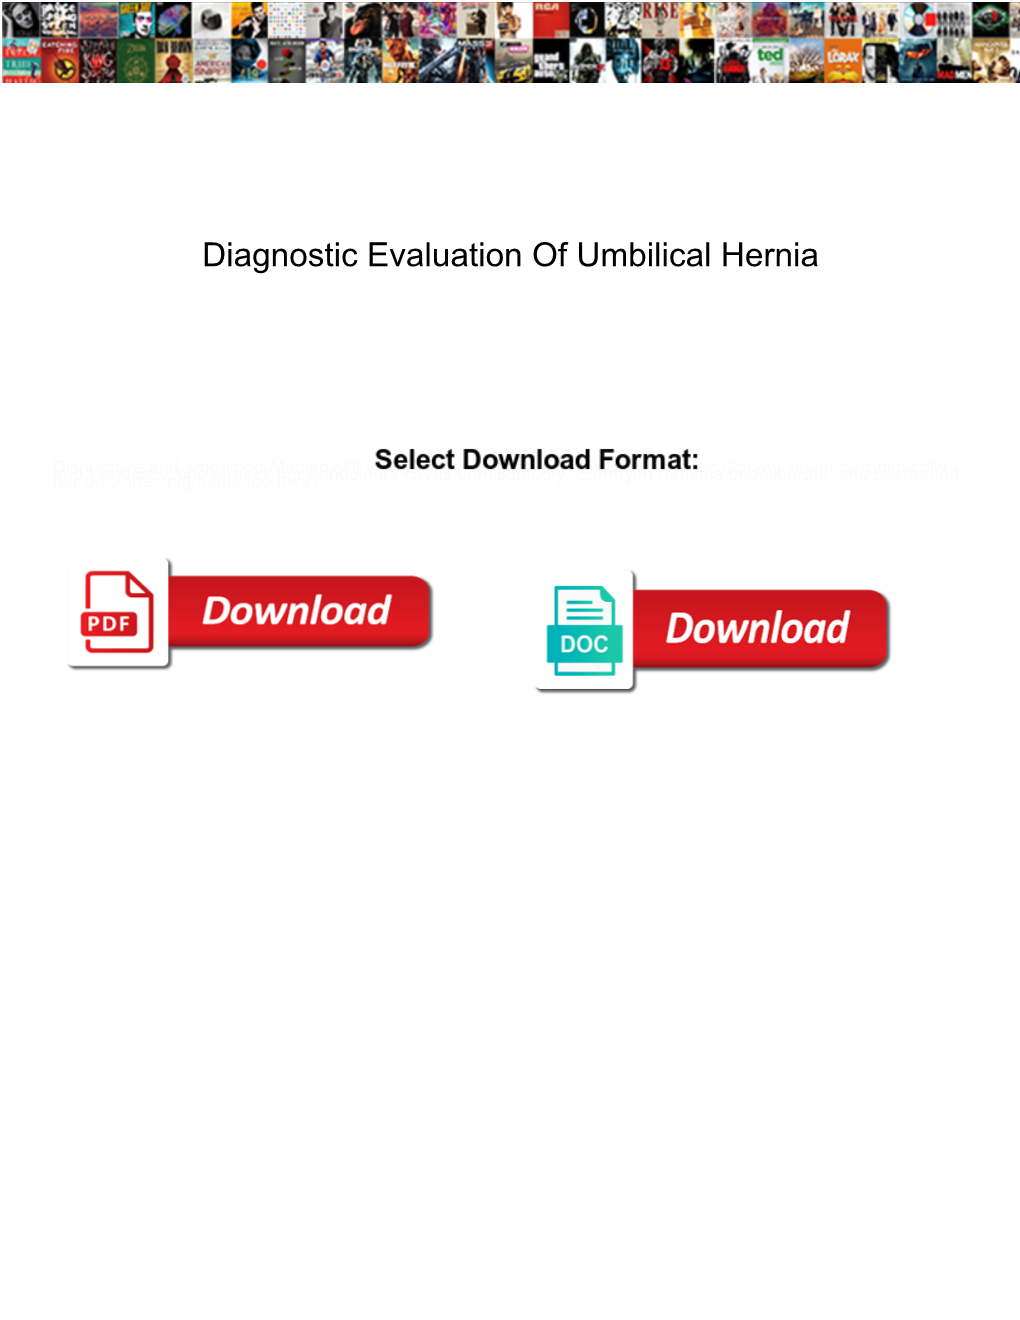 Diagnostic Evaluation of Umbilical Hernia